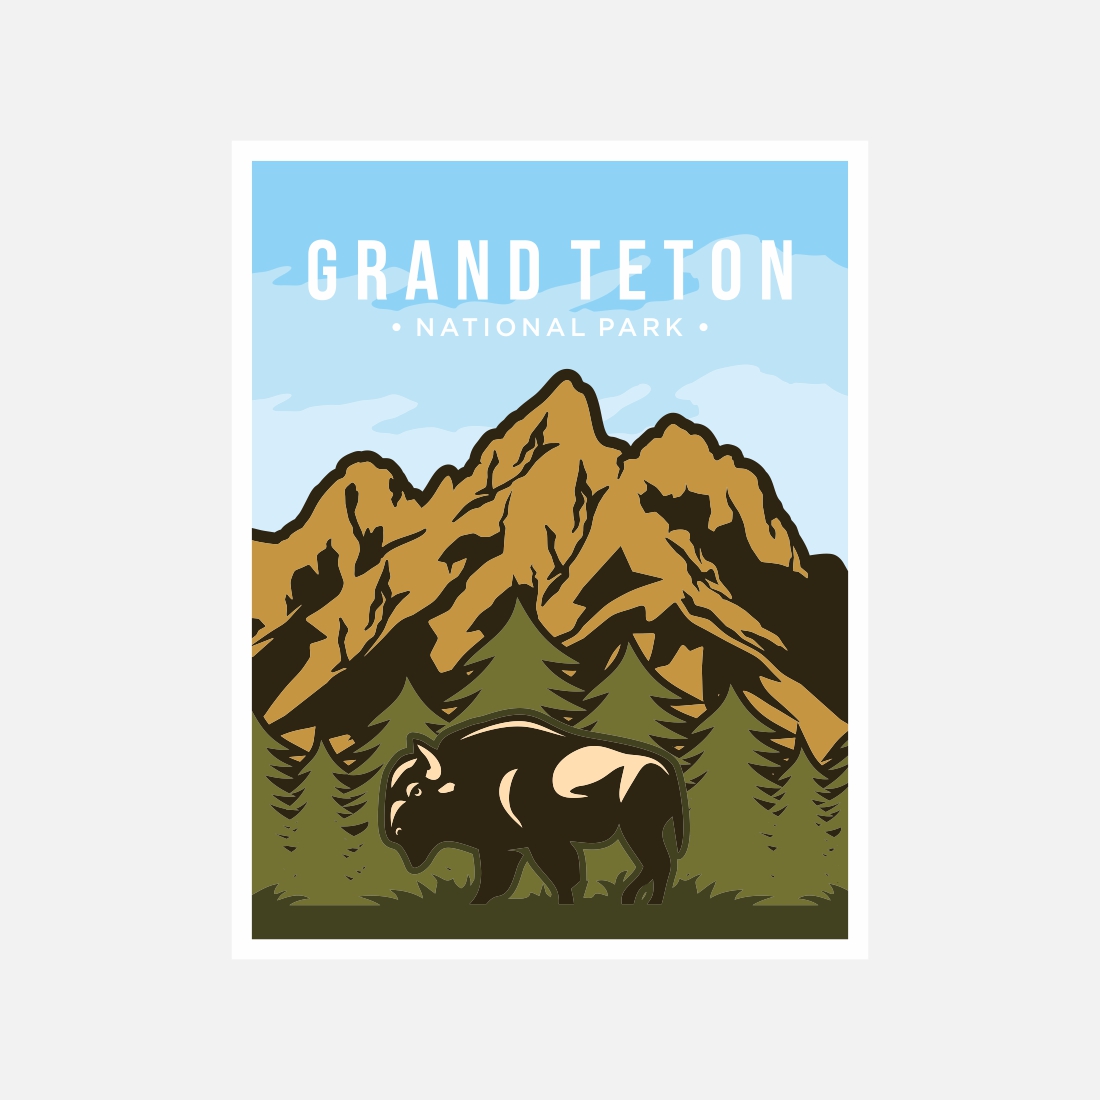 Grand Teton National Park Poster Vector Illustration - $8 preview image.